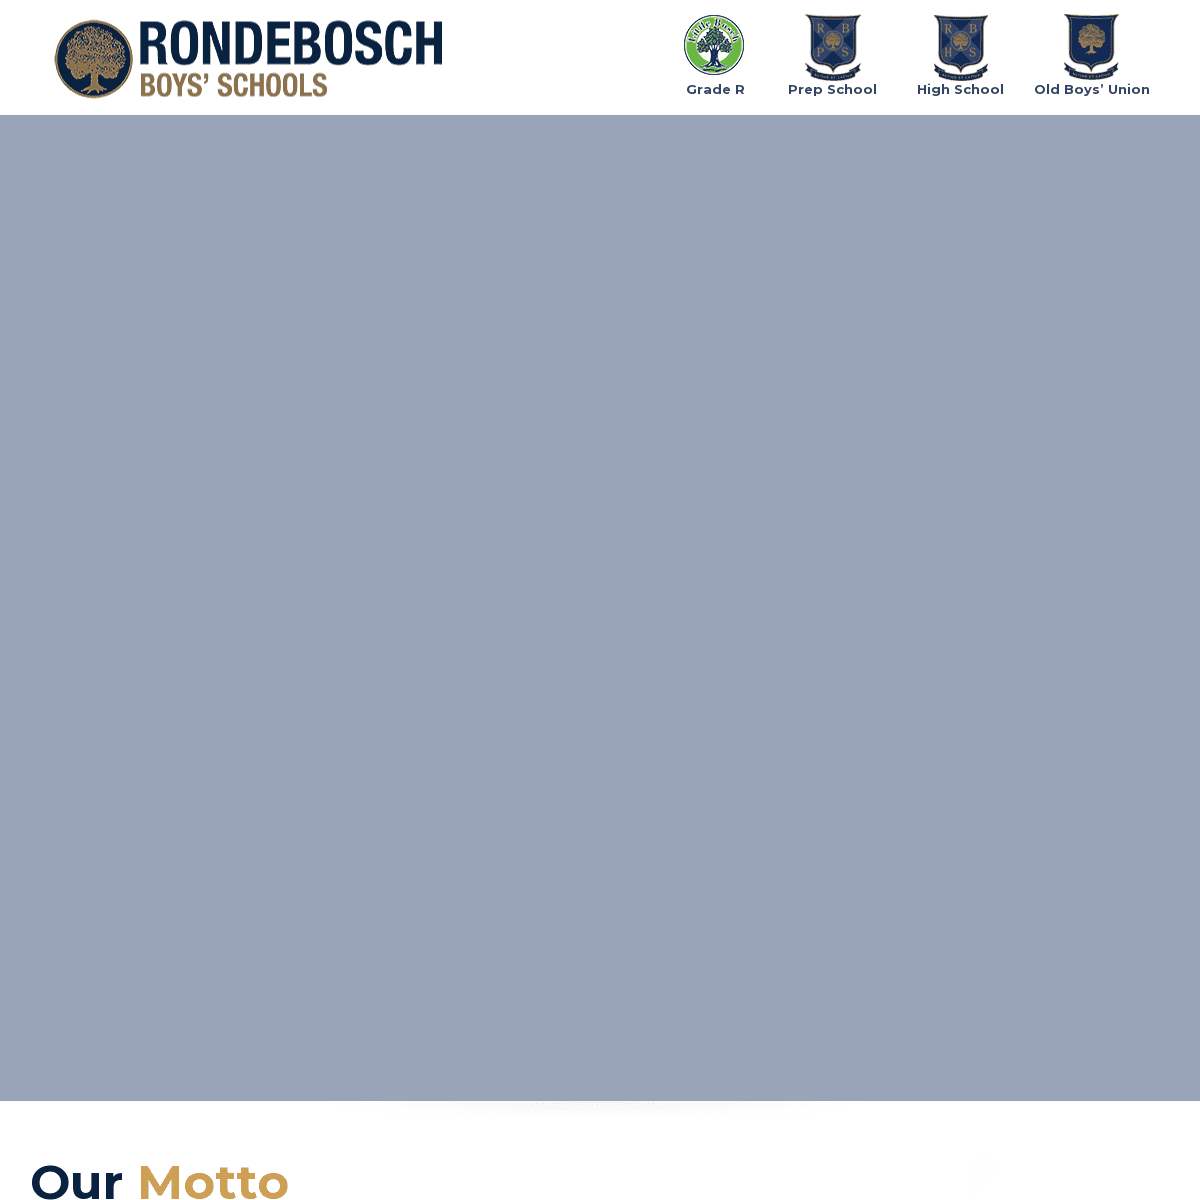 A complete backup of rondebosch.com